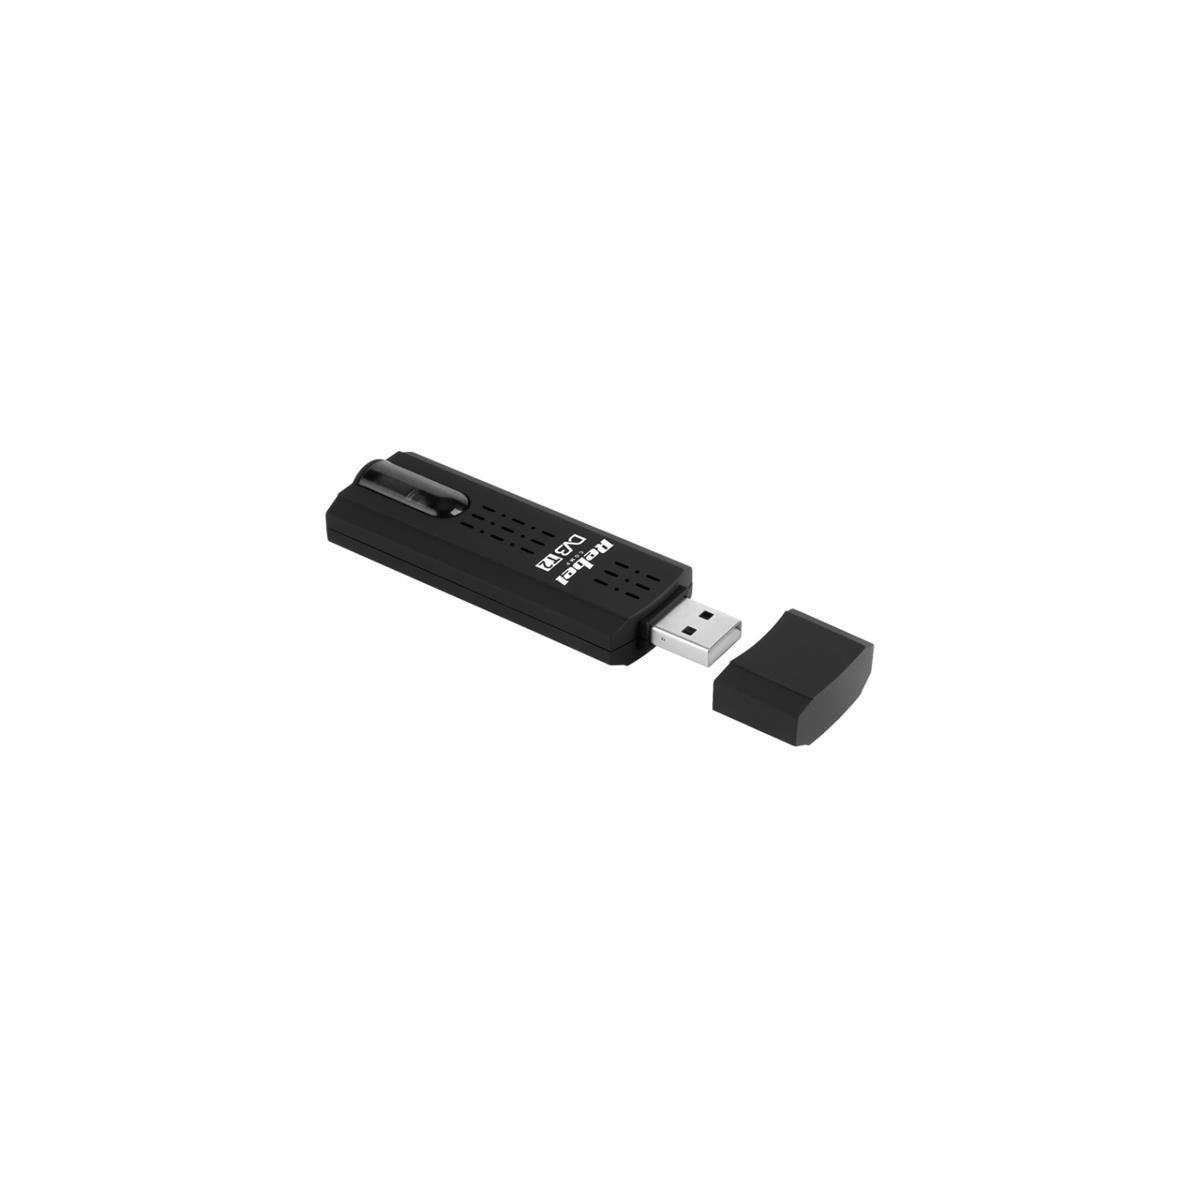 More about Set-top box USB REBEL KOM1060